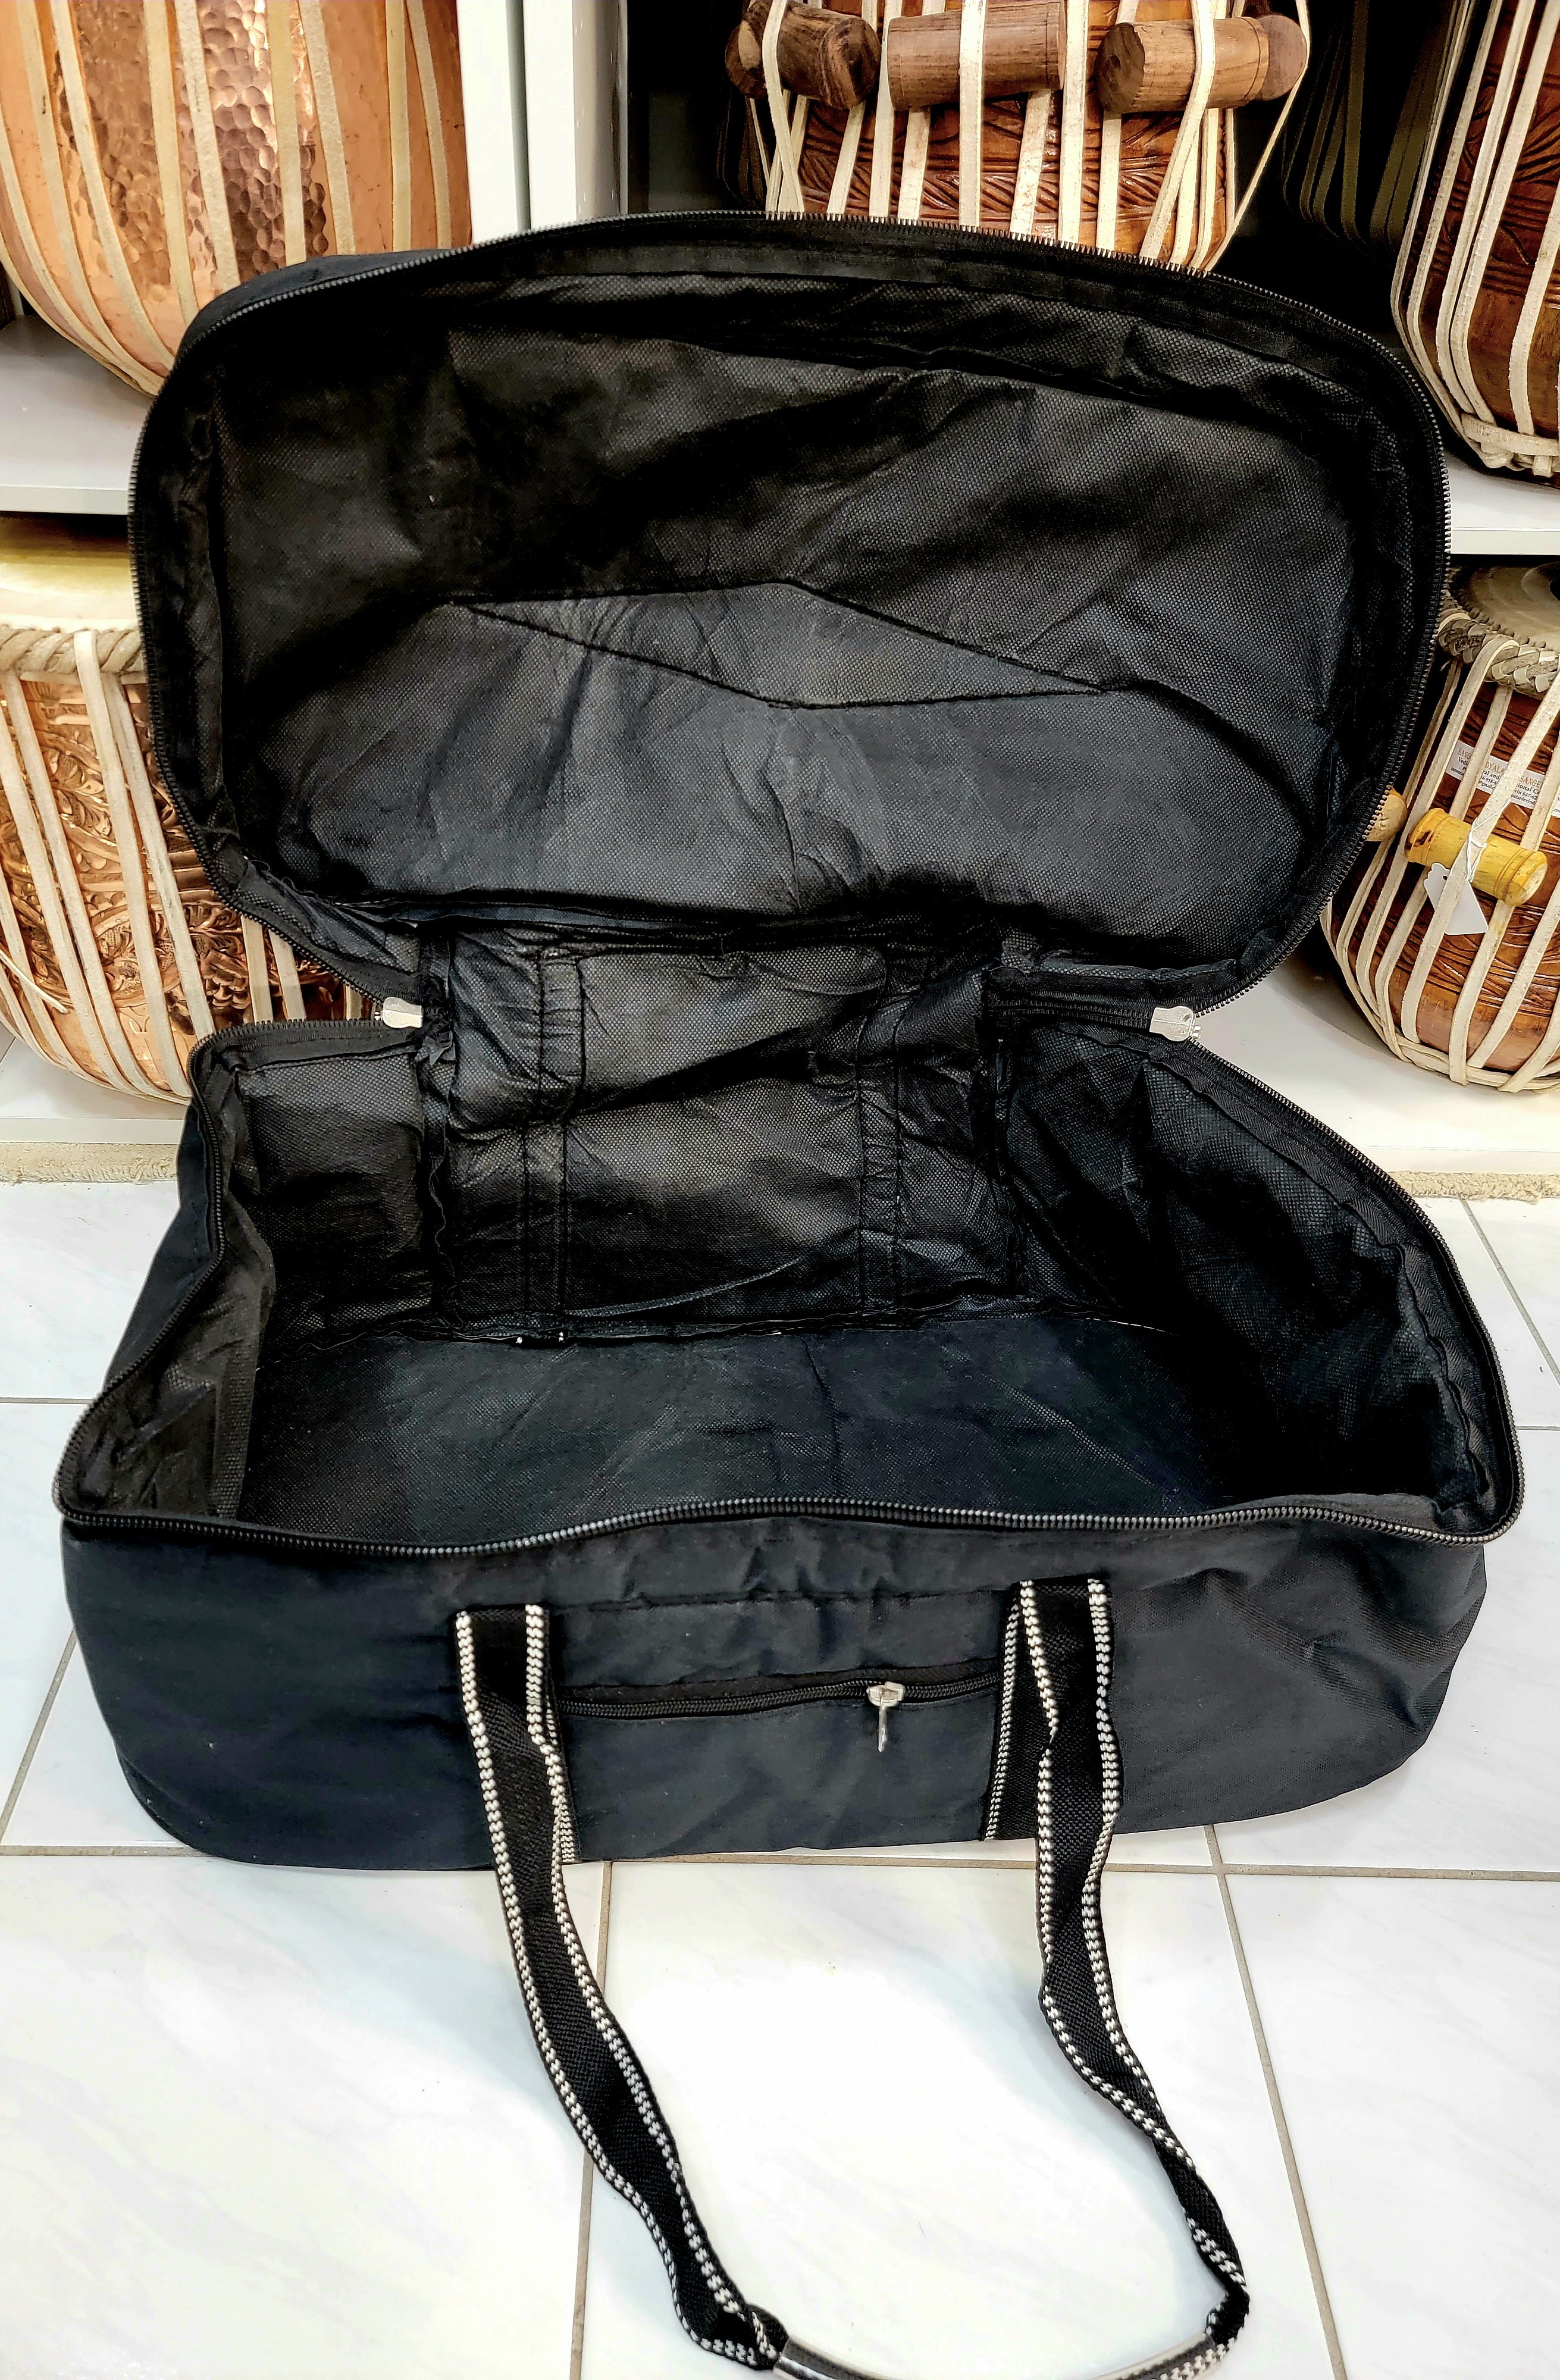 Black Tabla Bag (Black & White Handles) - Sangeet Store